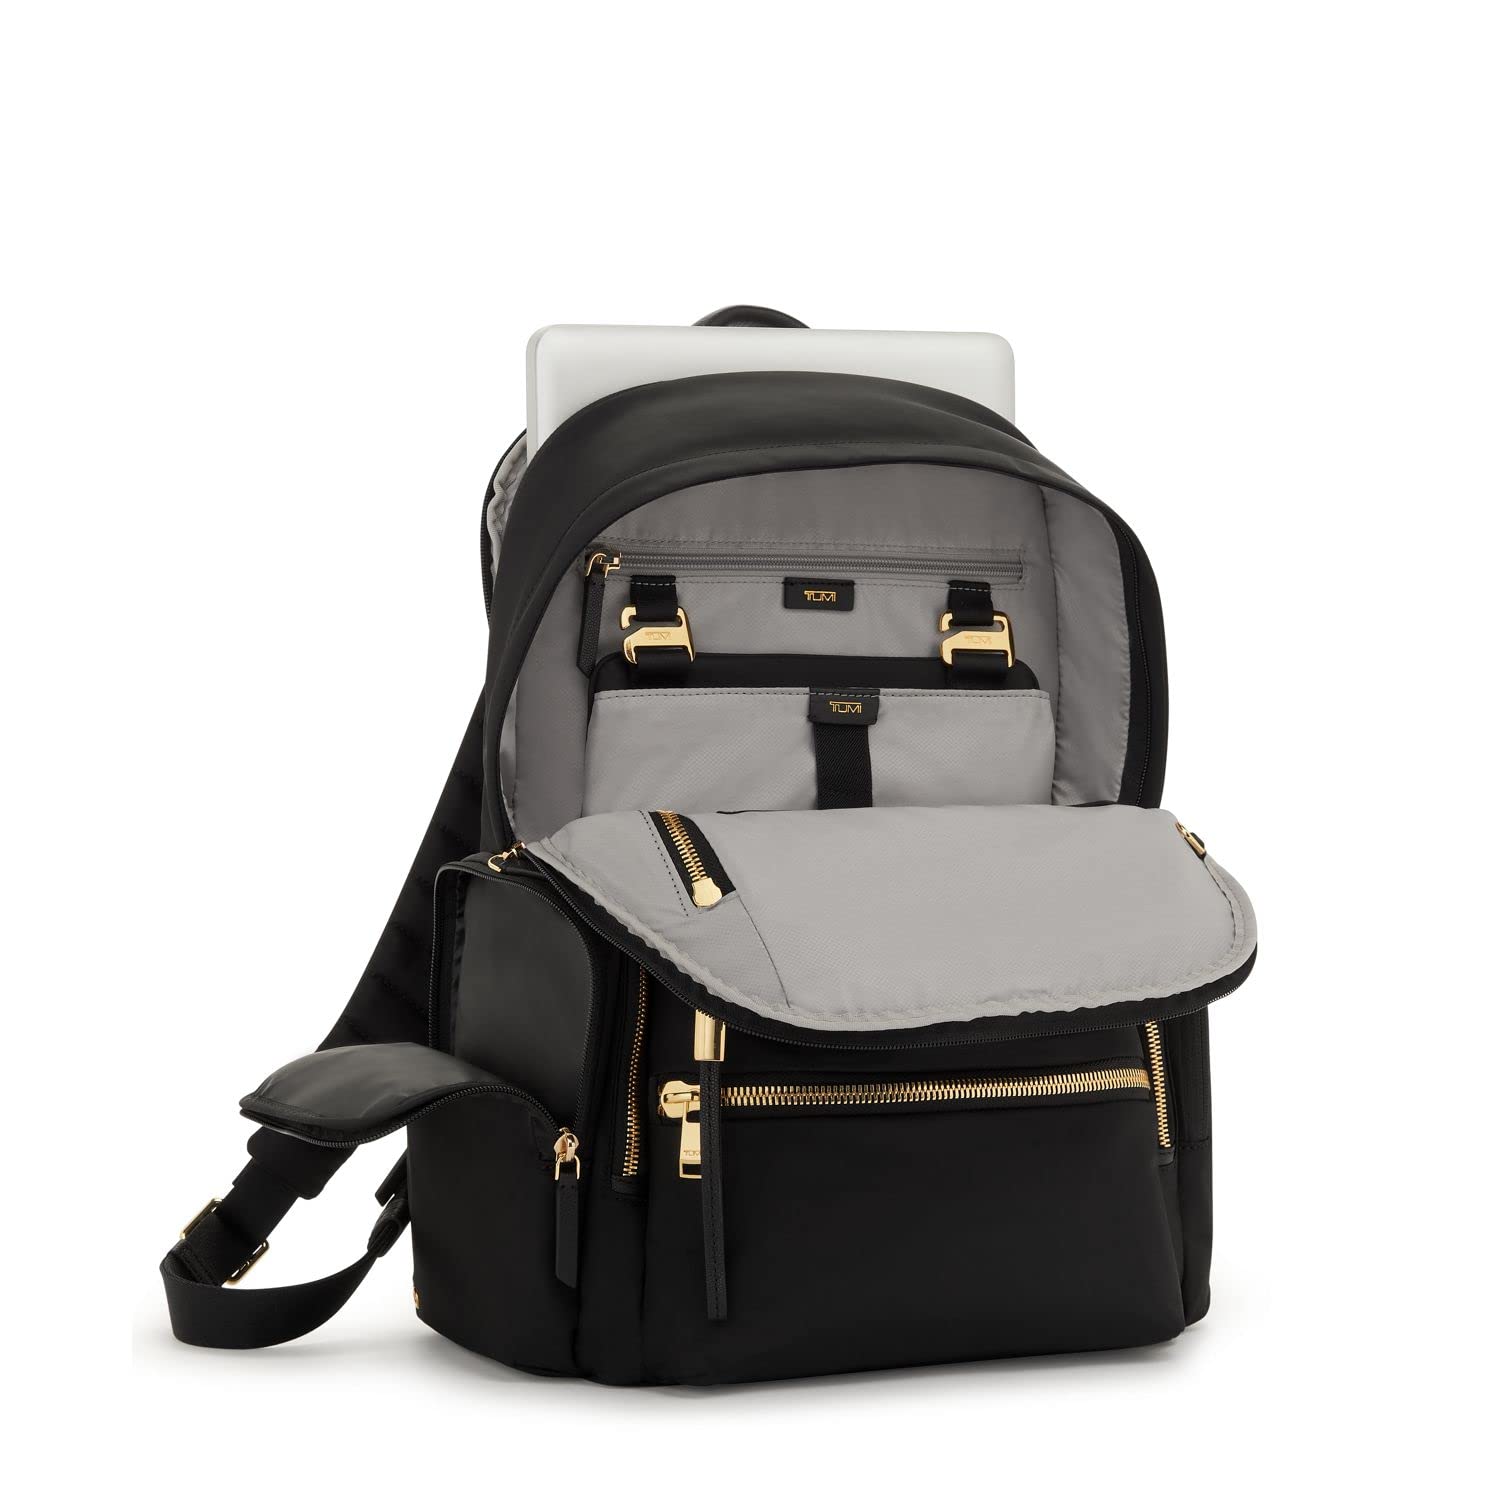 TUMI Voyageur Celina Backpack - Men's & Women's Backpack - Travel Bag - Indigo - Gold Hardware - 16.0